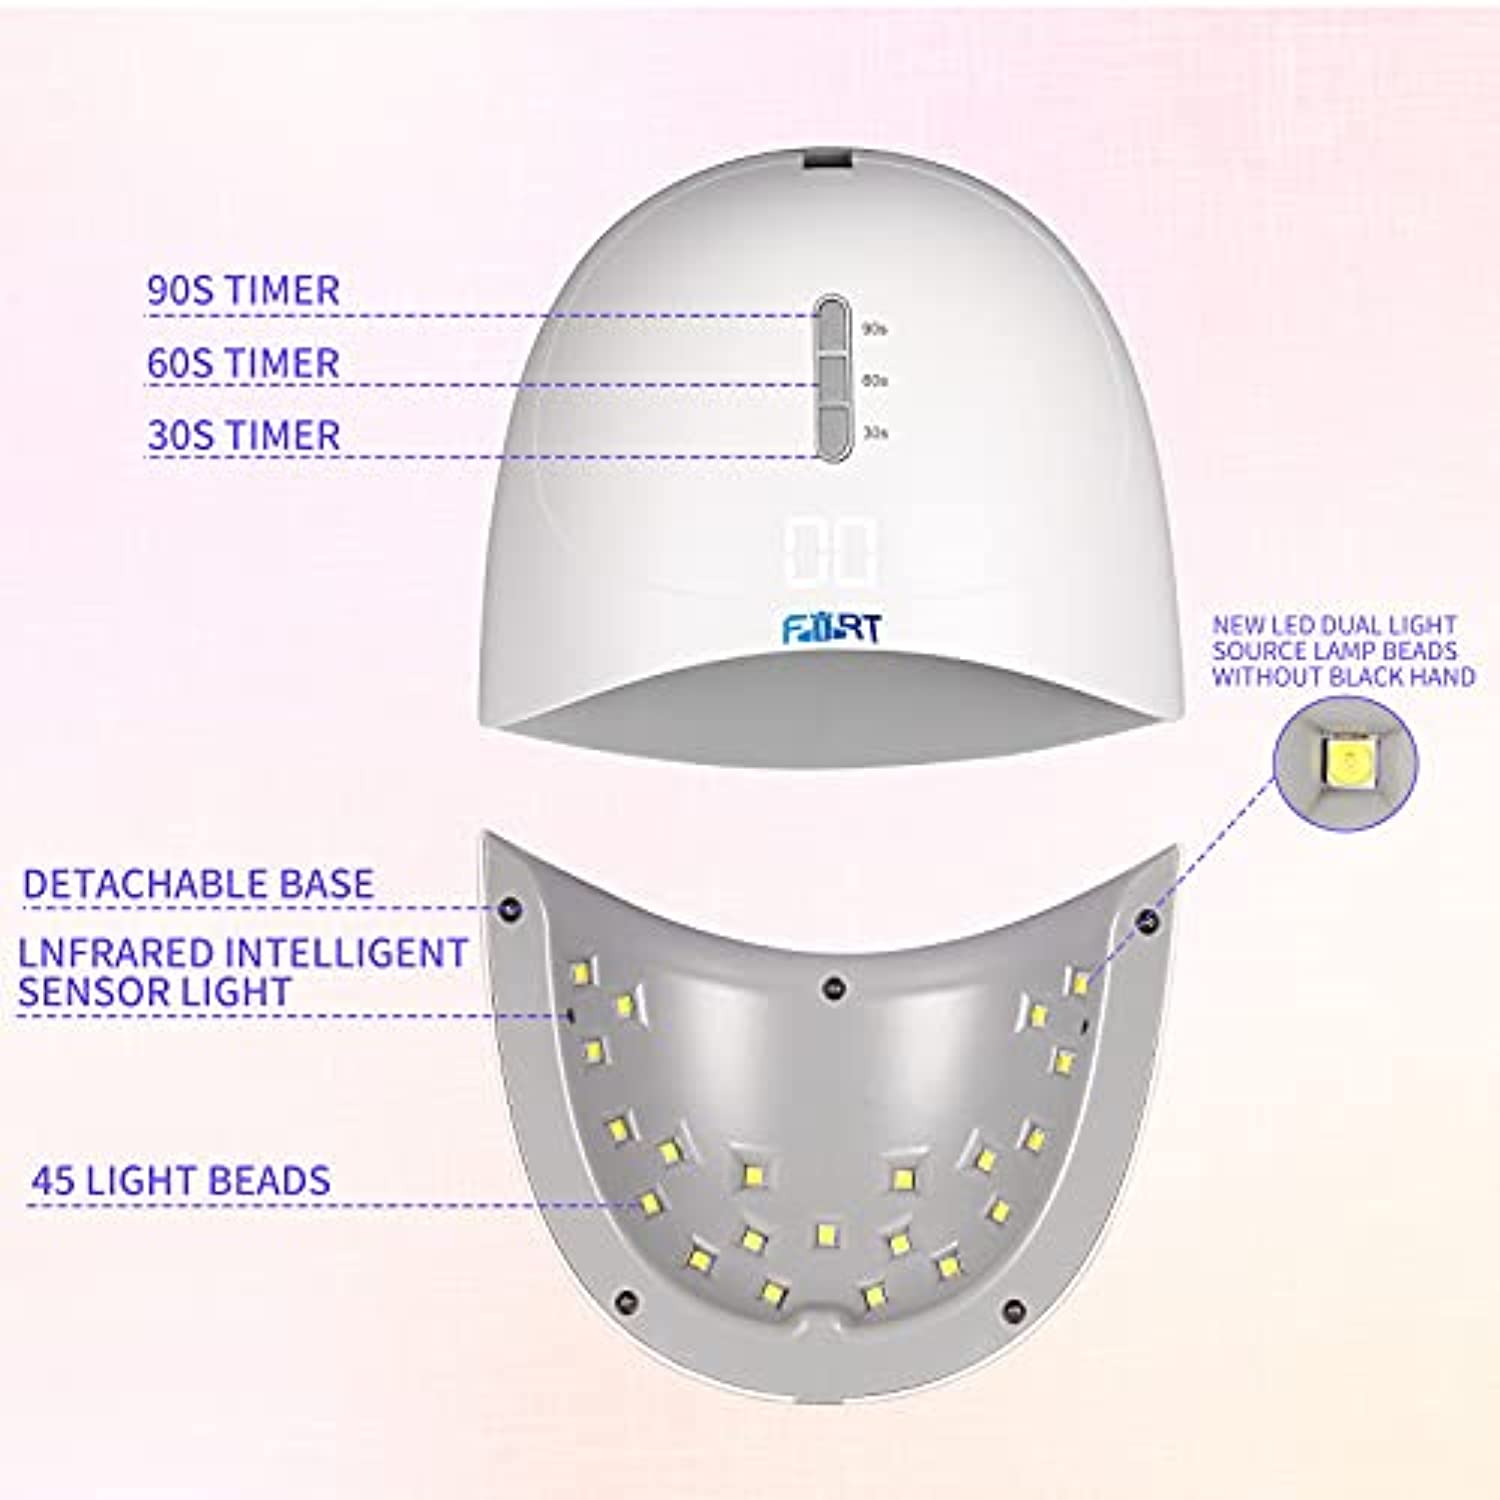 UV Gel Nail Lamp, FORT 36W LED Nail Dryer Light for Gel Polish, Smart Timer Sensor and LCD Display Suitable for Home, Salon